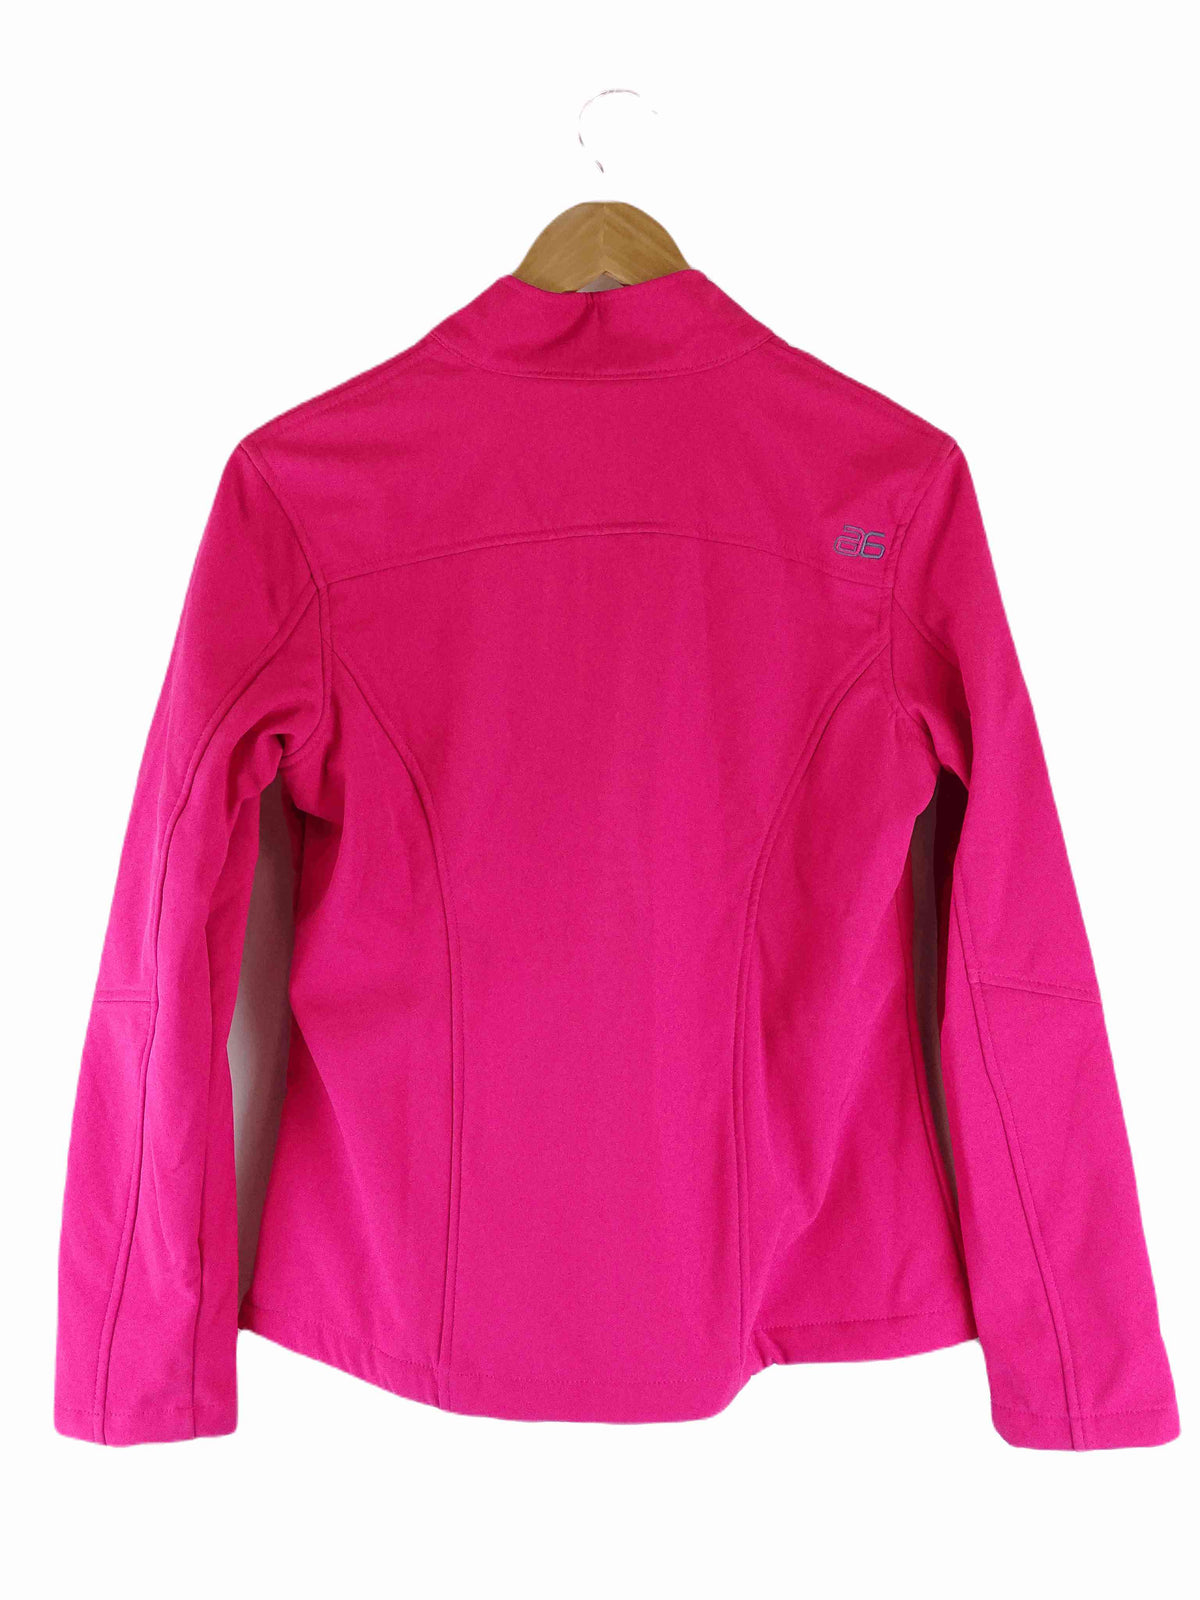 Arctix Pink Jacket M